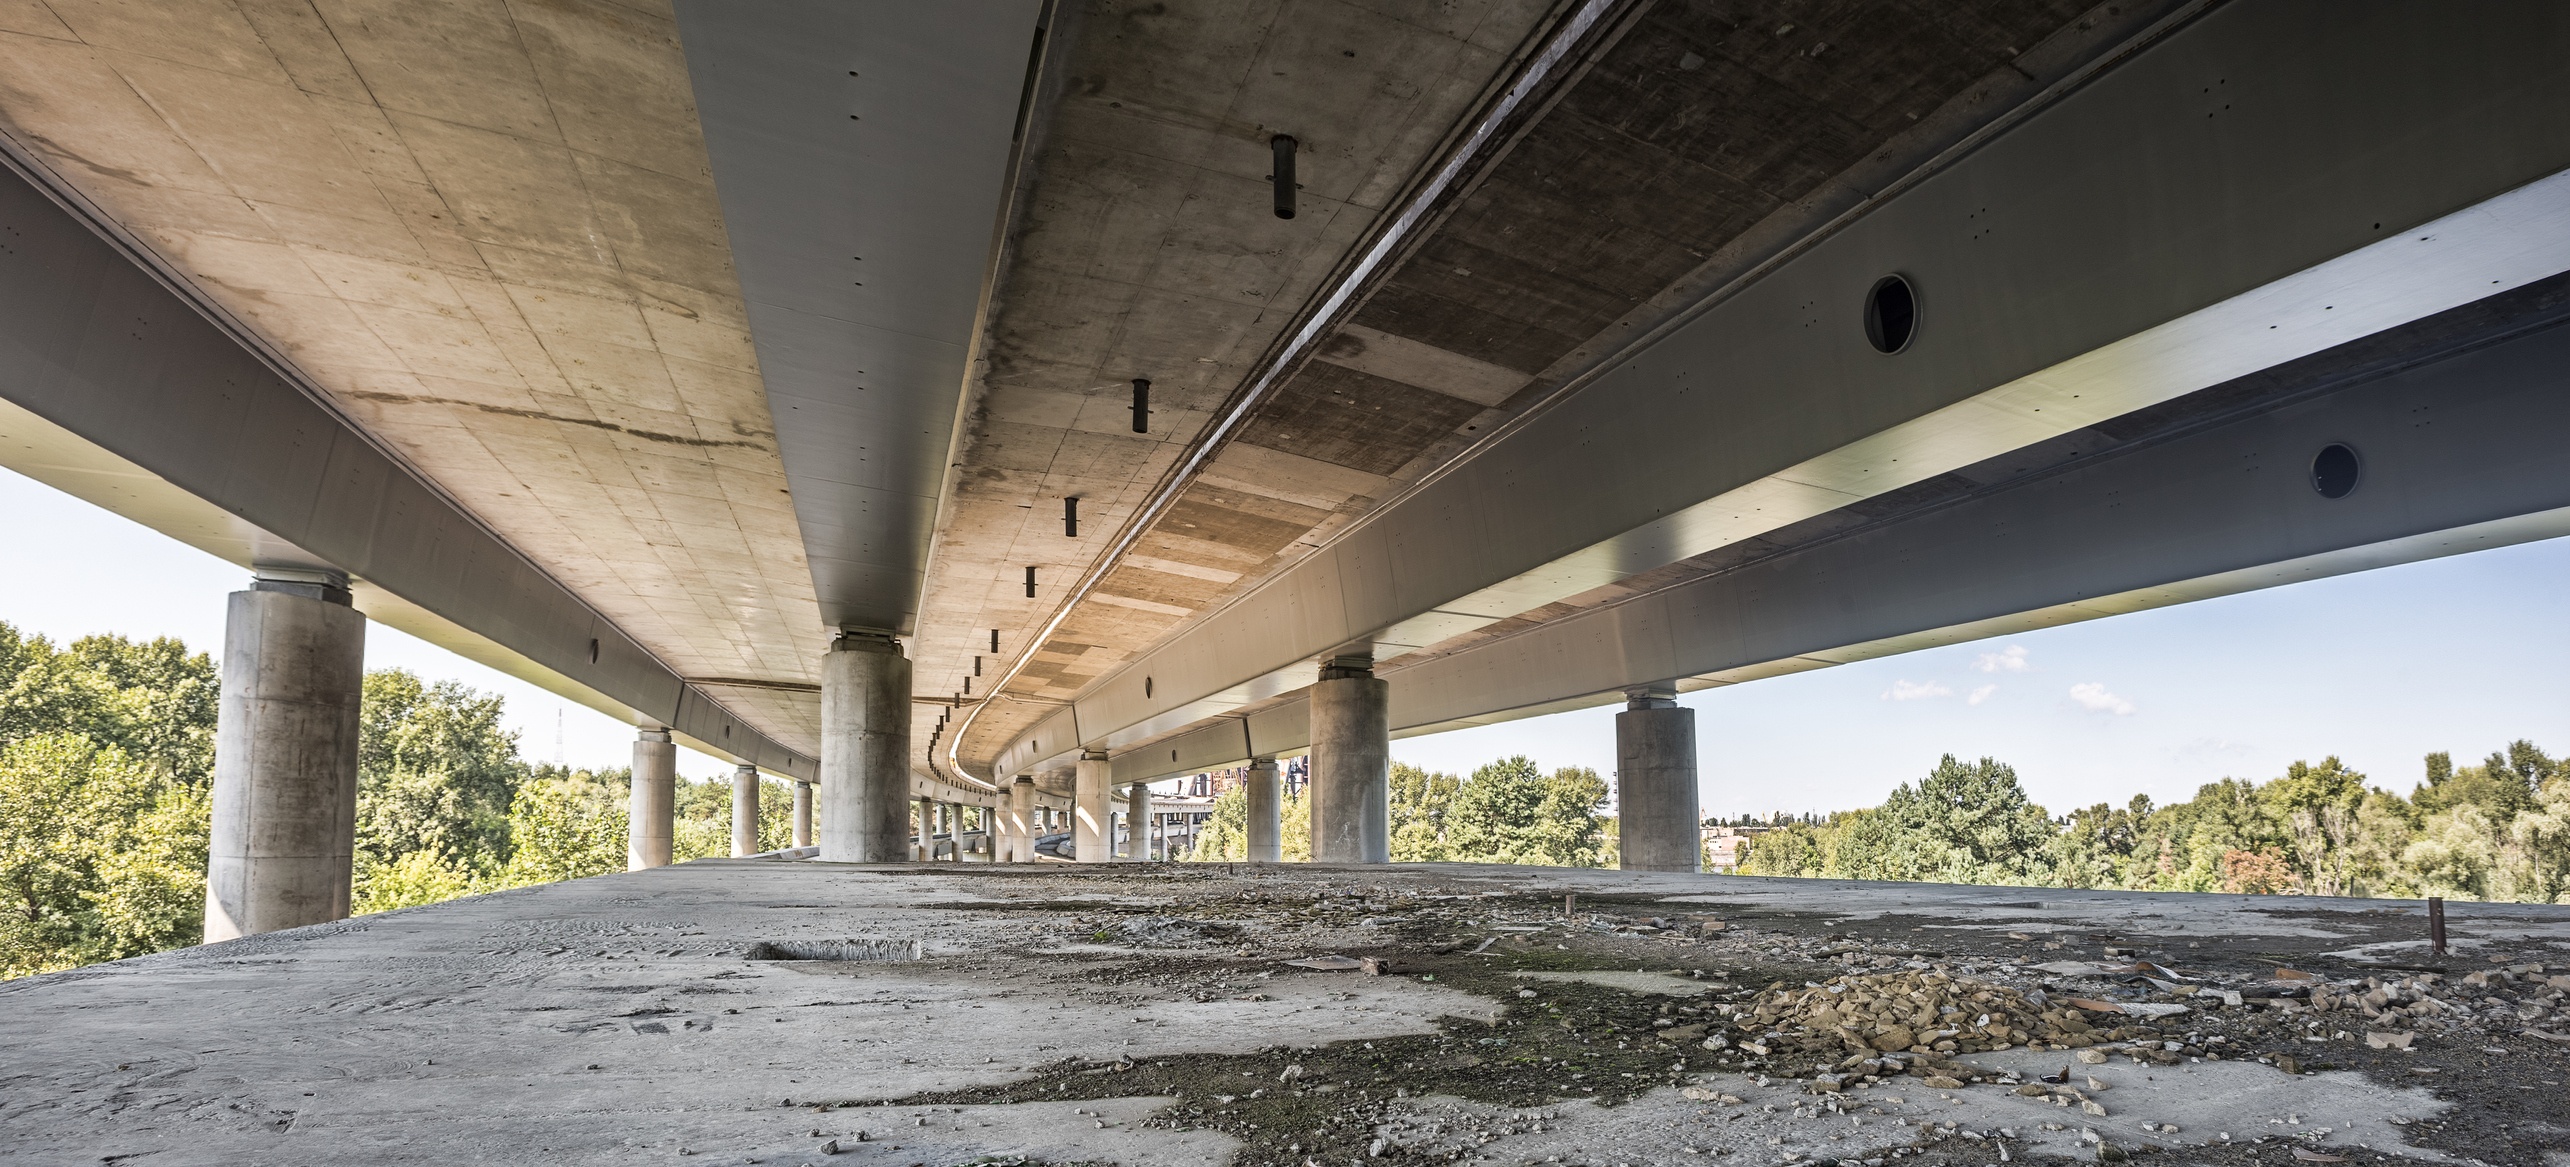 Bridge Rehabilitation Completed with UHPC Concrete